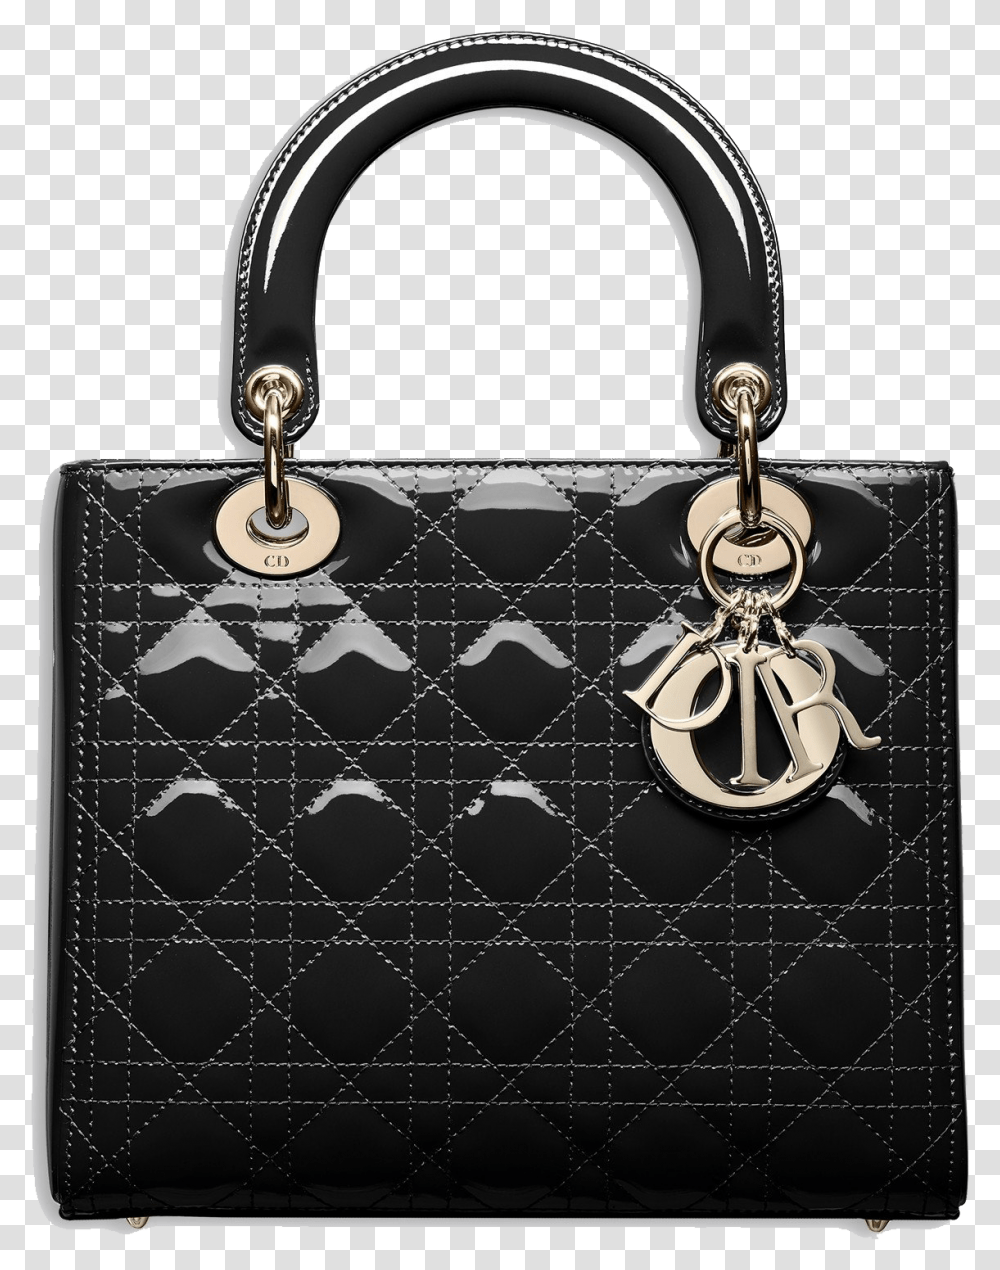 Black Dior Bag Image Background Lady Dior Black Patent, Handbag, Accessories, Accessory, Purse Transparent Png